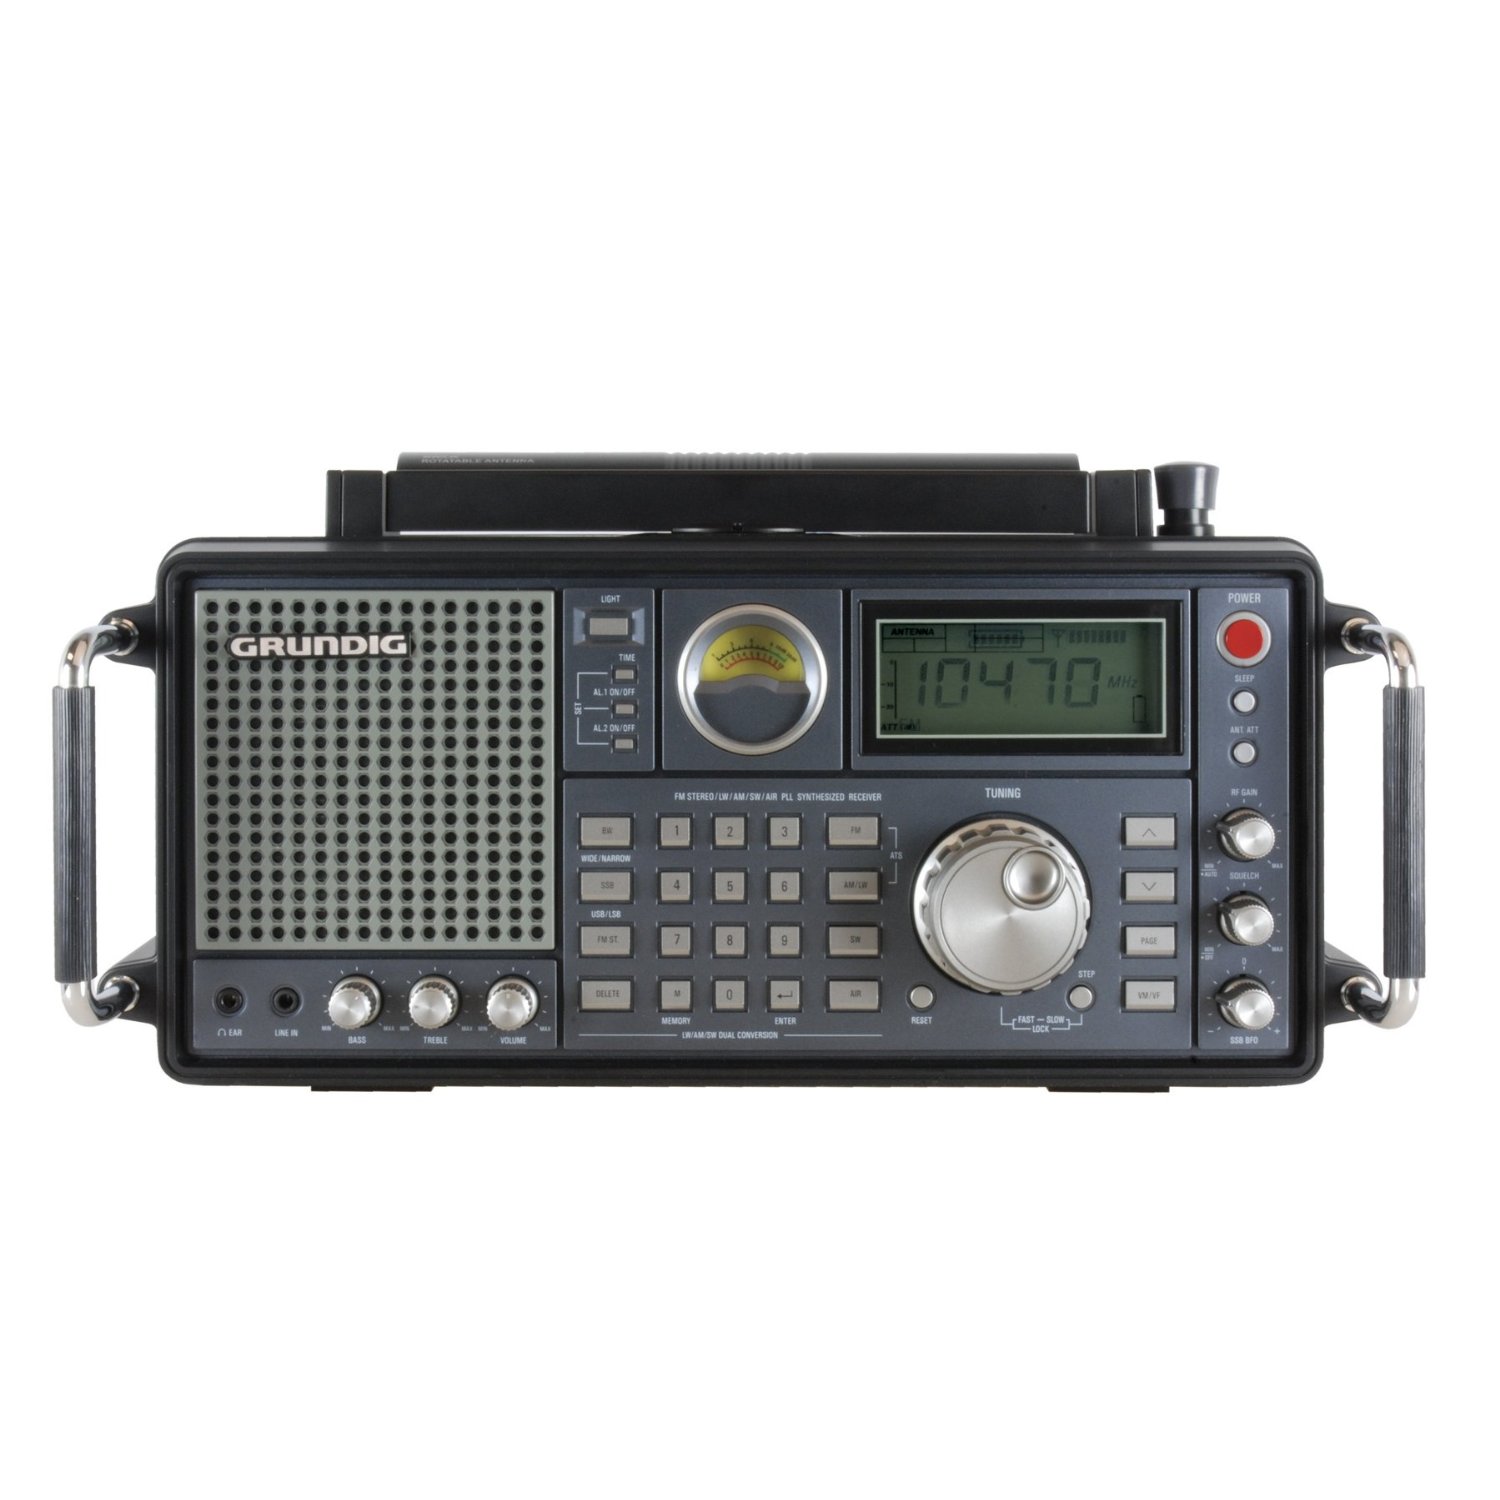 750 Grundig AM/FM-Stereo/Shortwave/Aircraft Band Radio with SSB (Single Side Band)